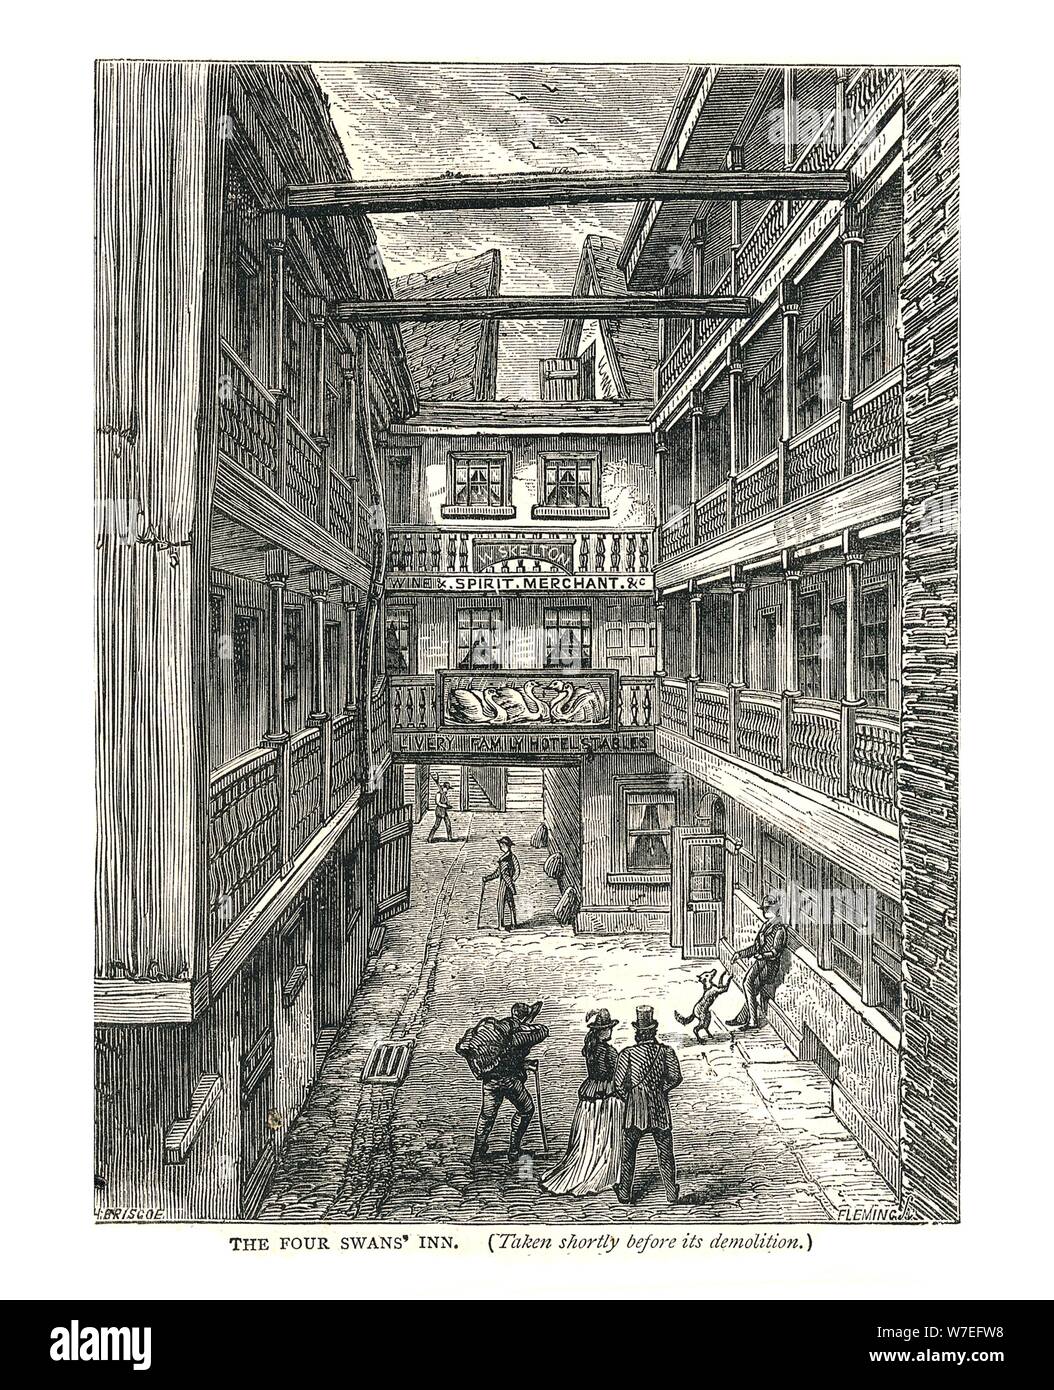 The Four Swans Inn shortly before demolition, 1878. Artist: Walter Thornbury Stock Photo